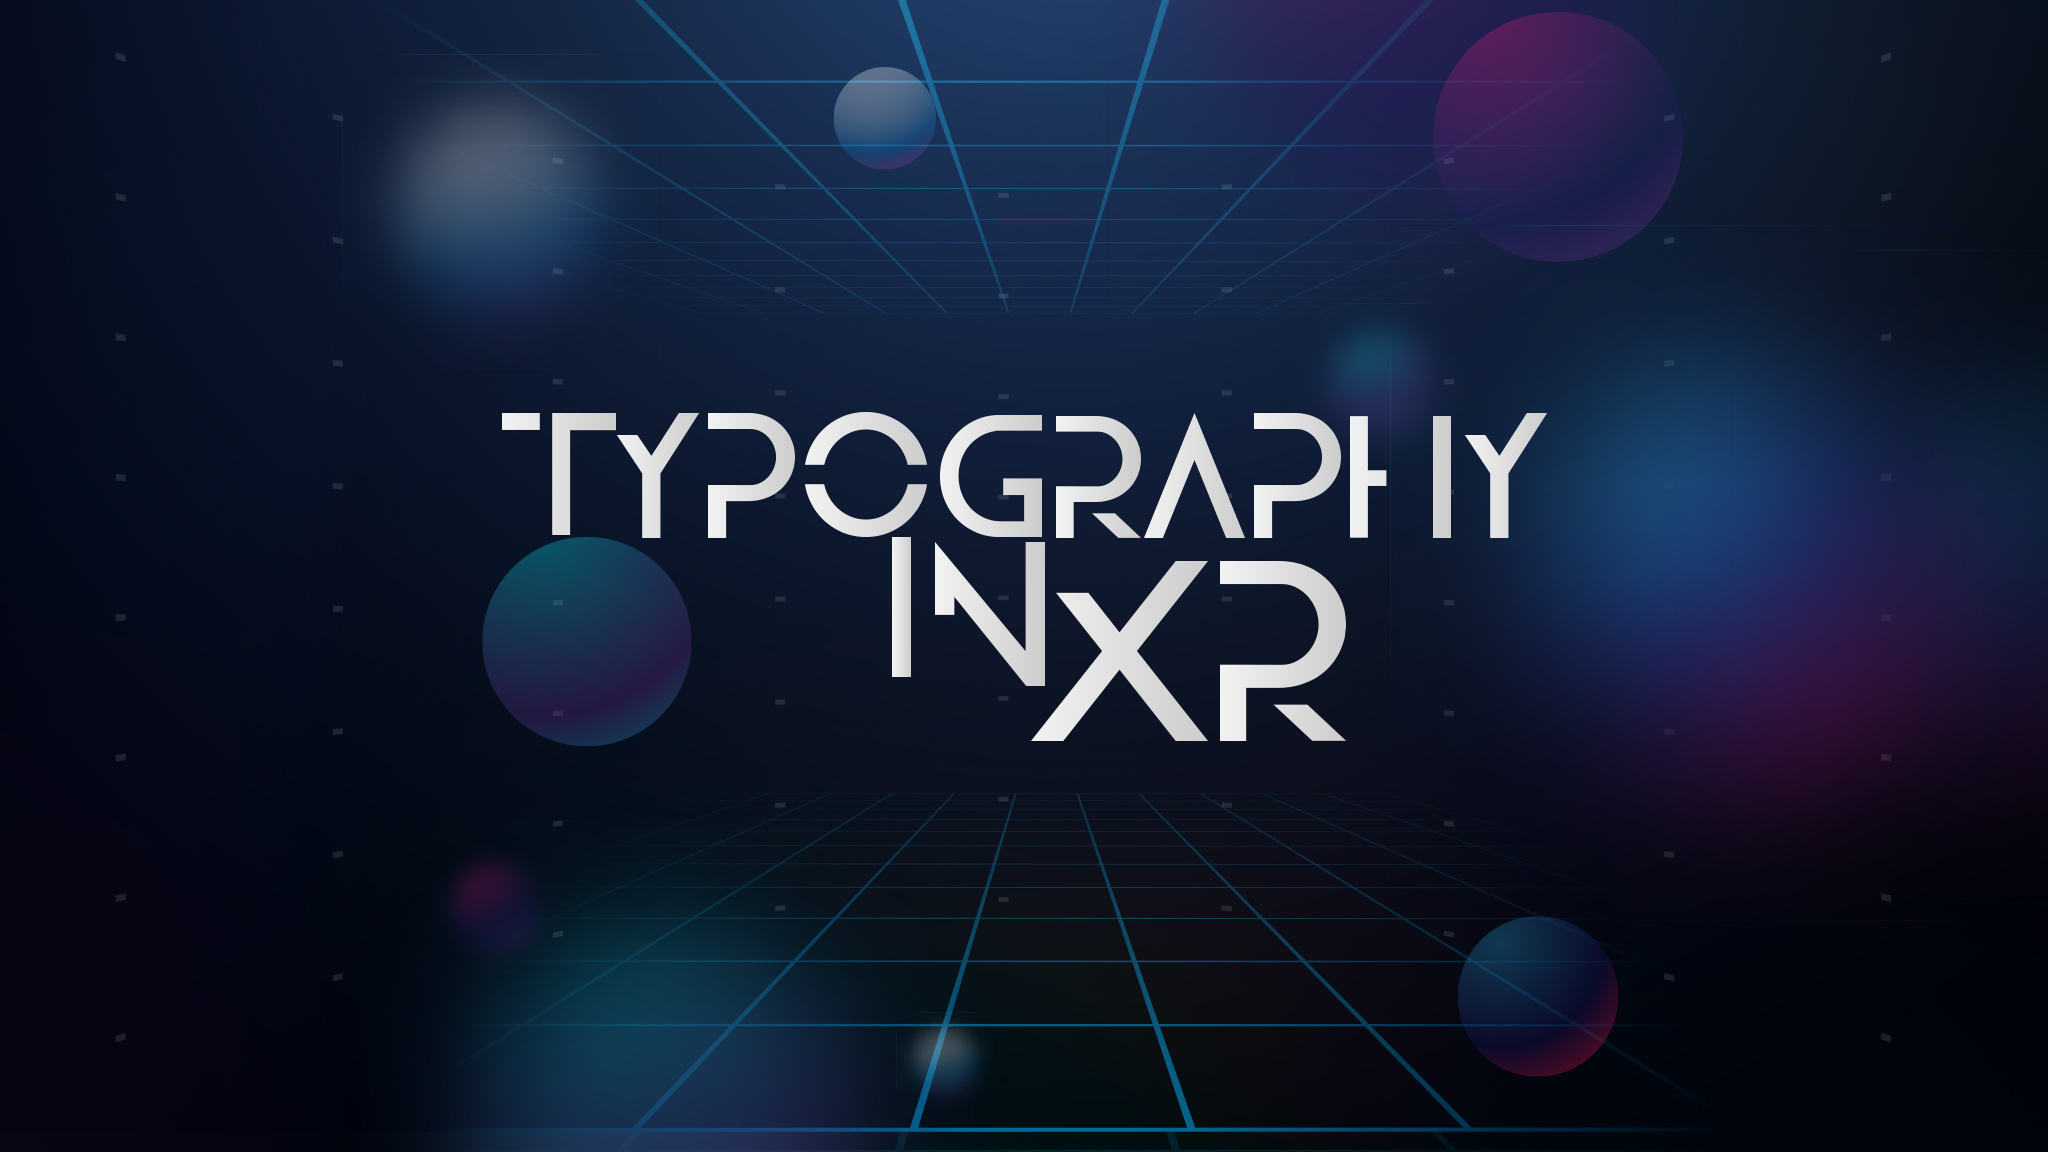 XR Typography